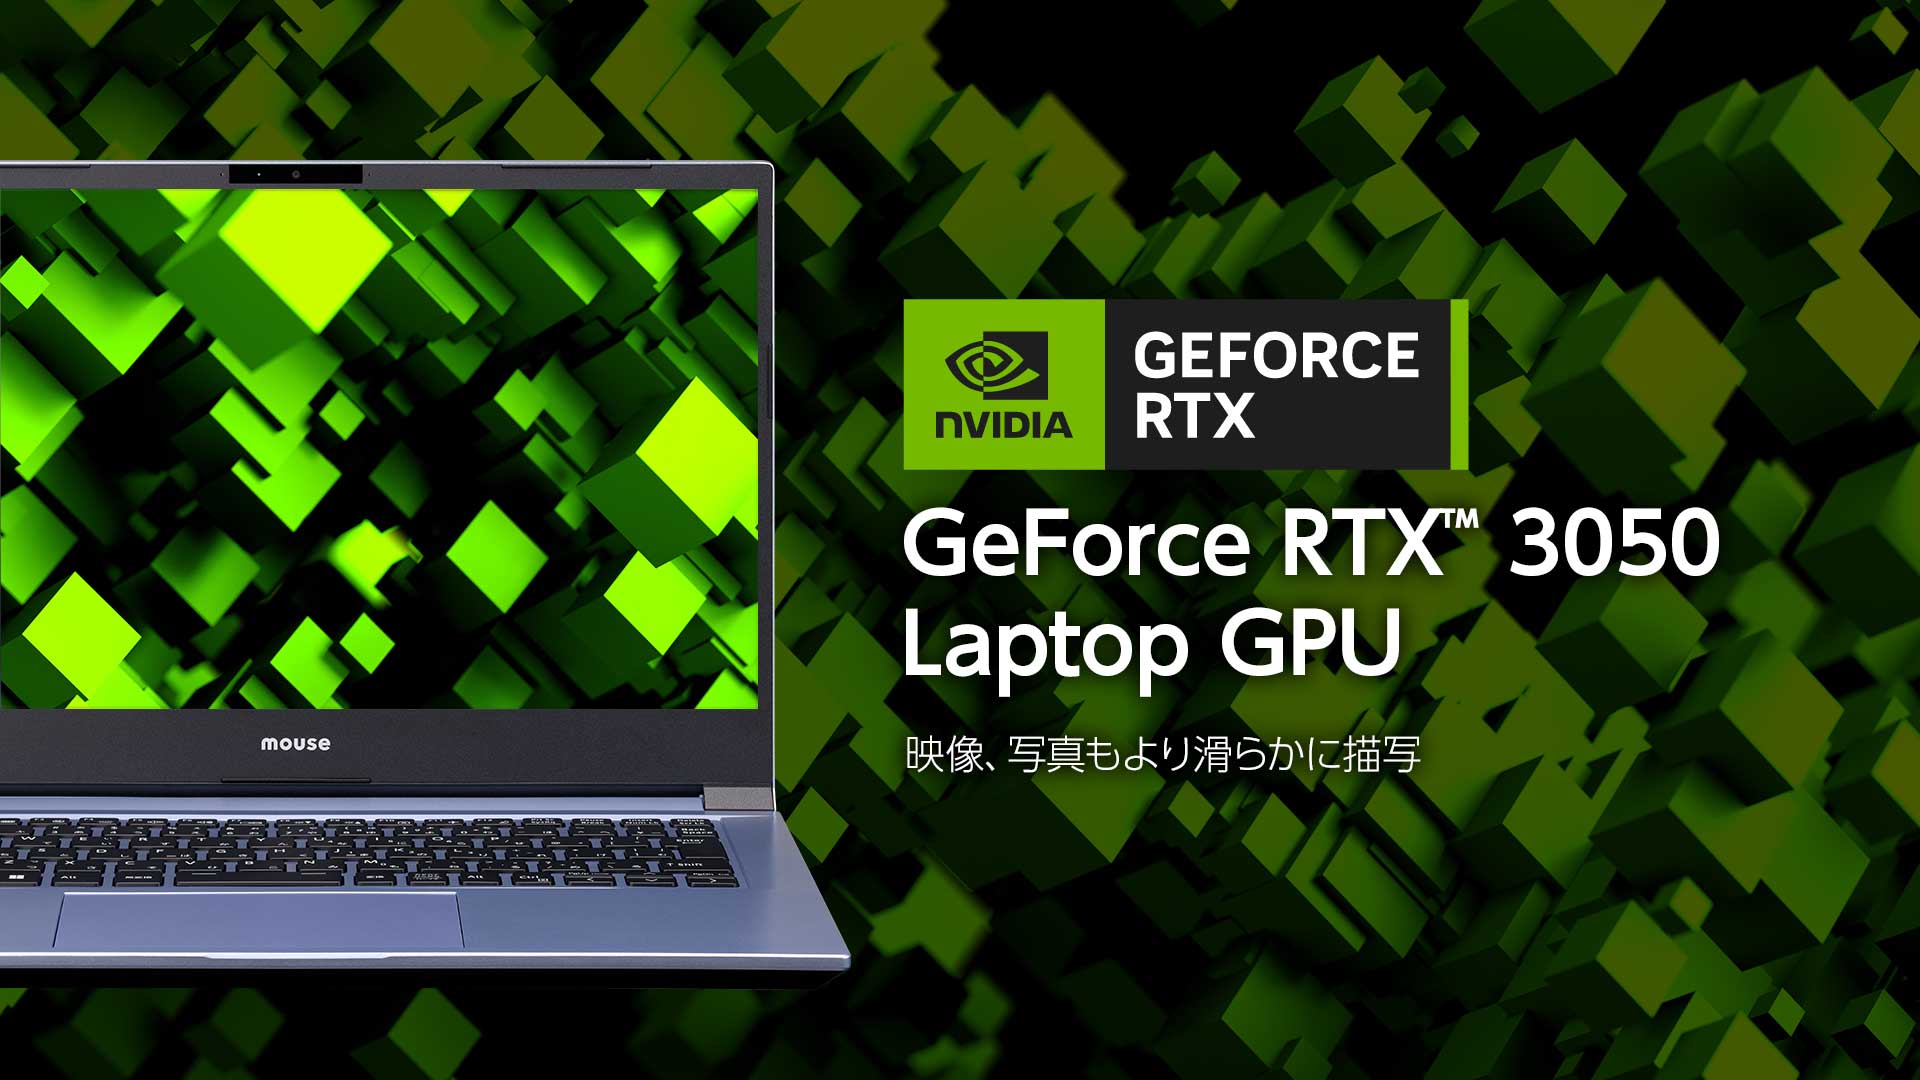 NVIDIA GeForce RTX 3050 Laptop GPU